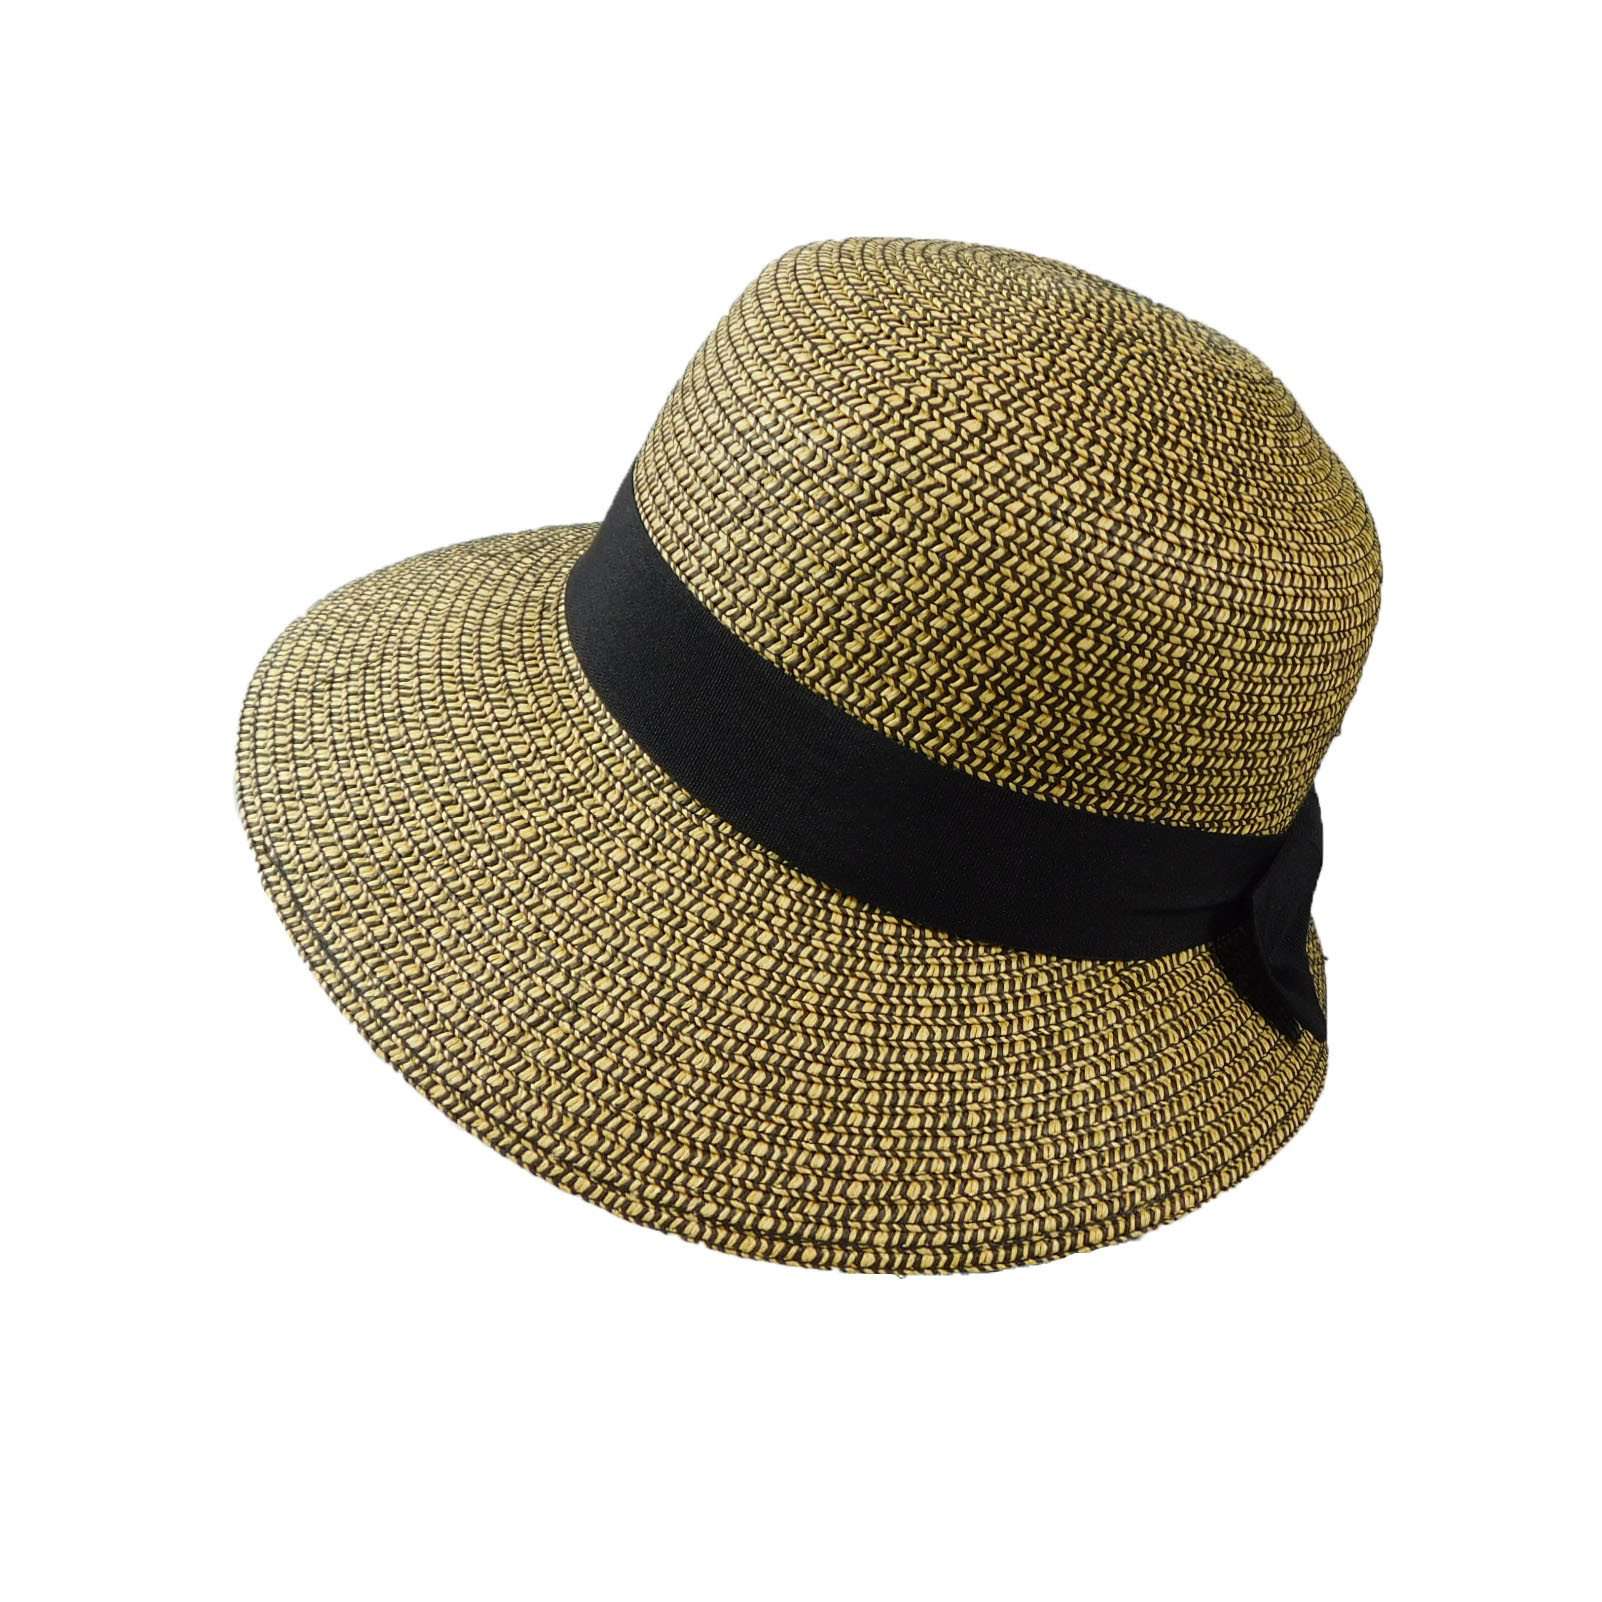 Downturned Brim Summer Hat Wide Brim Hat JEL WSPS610BK Black tweed  